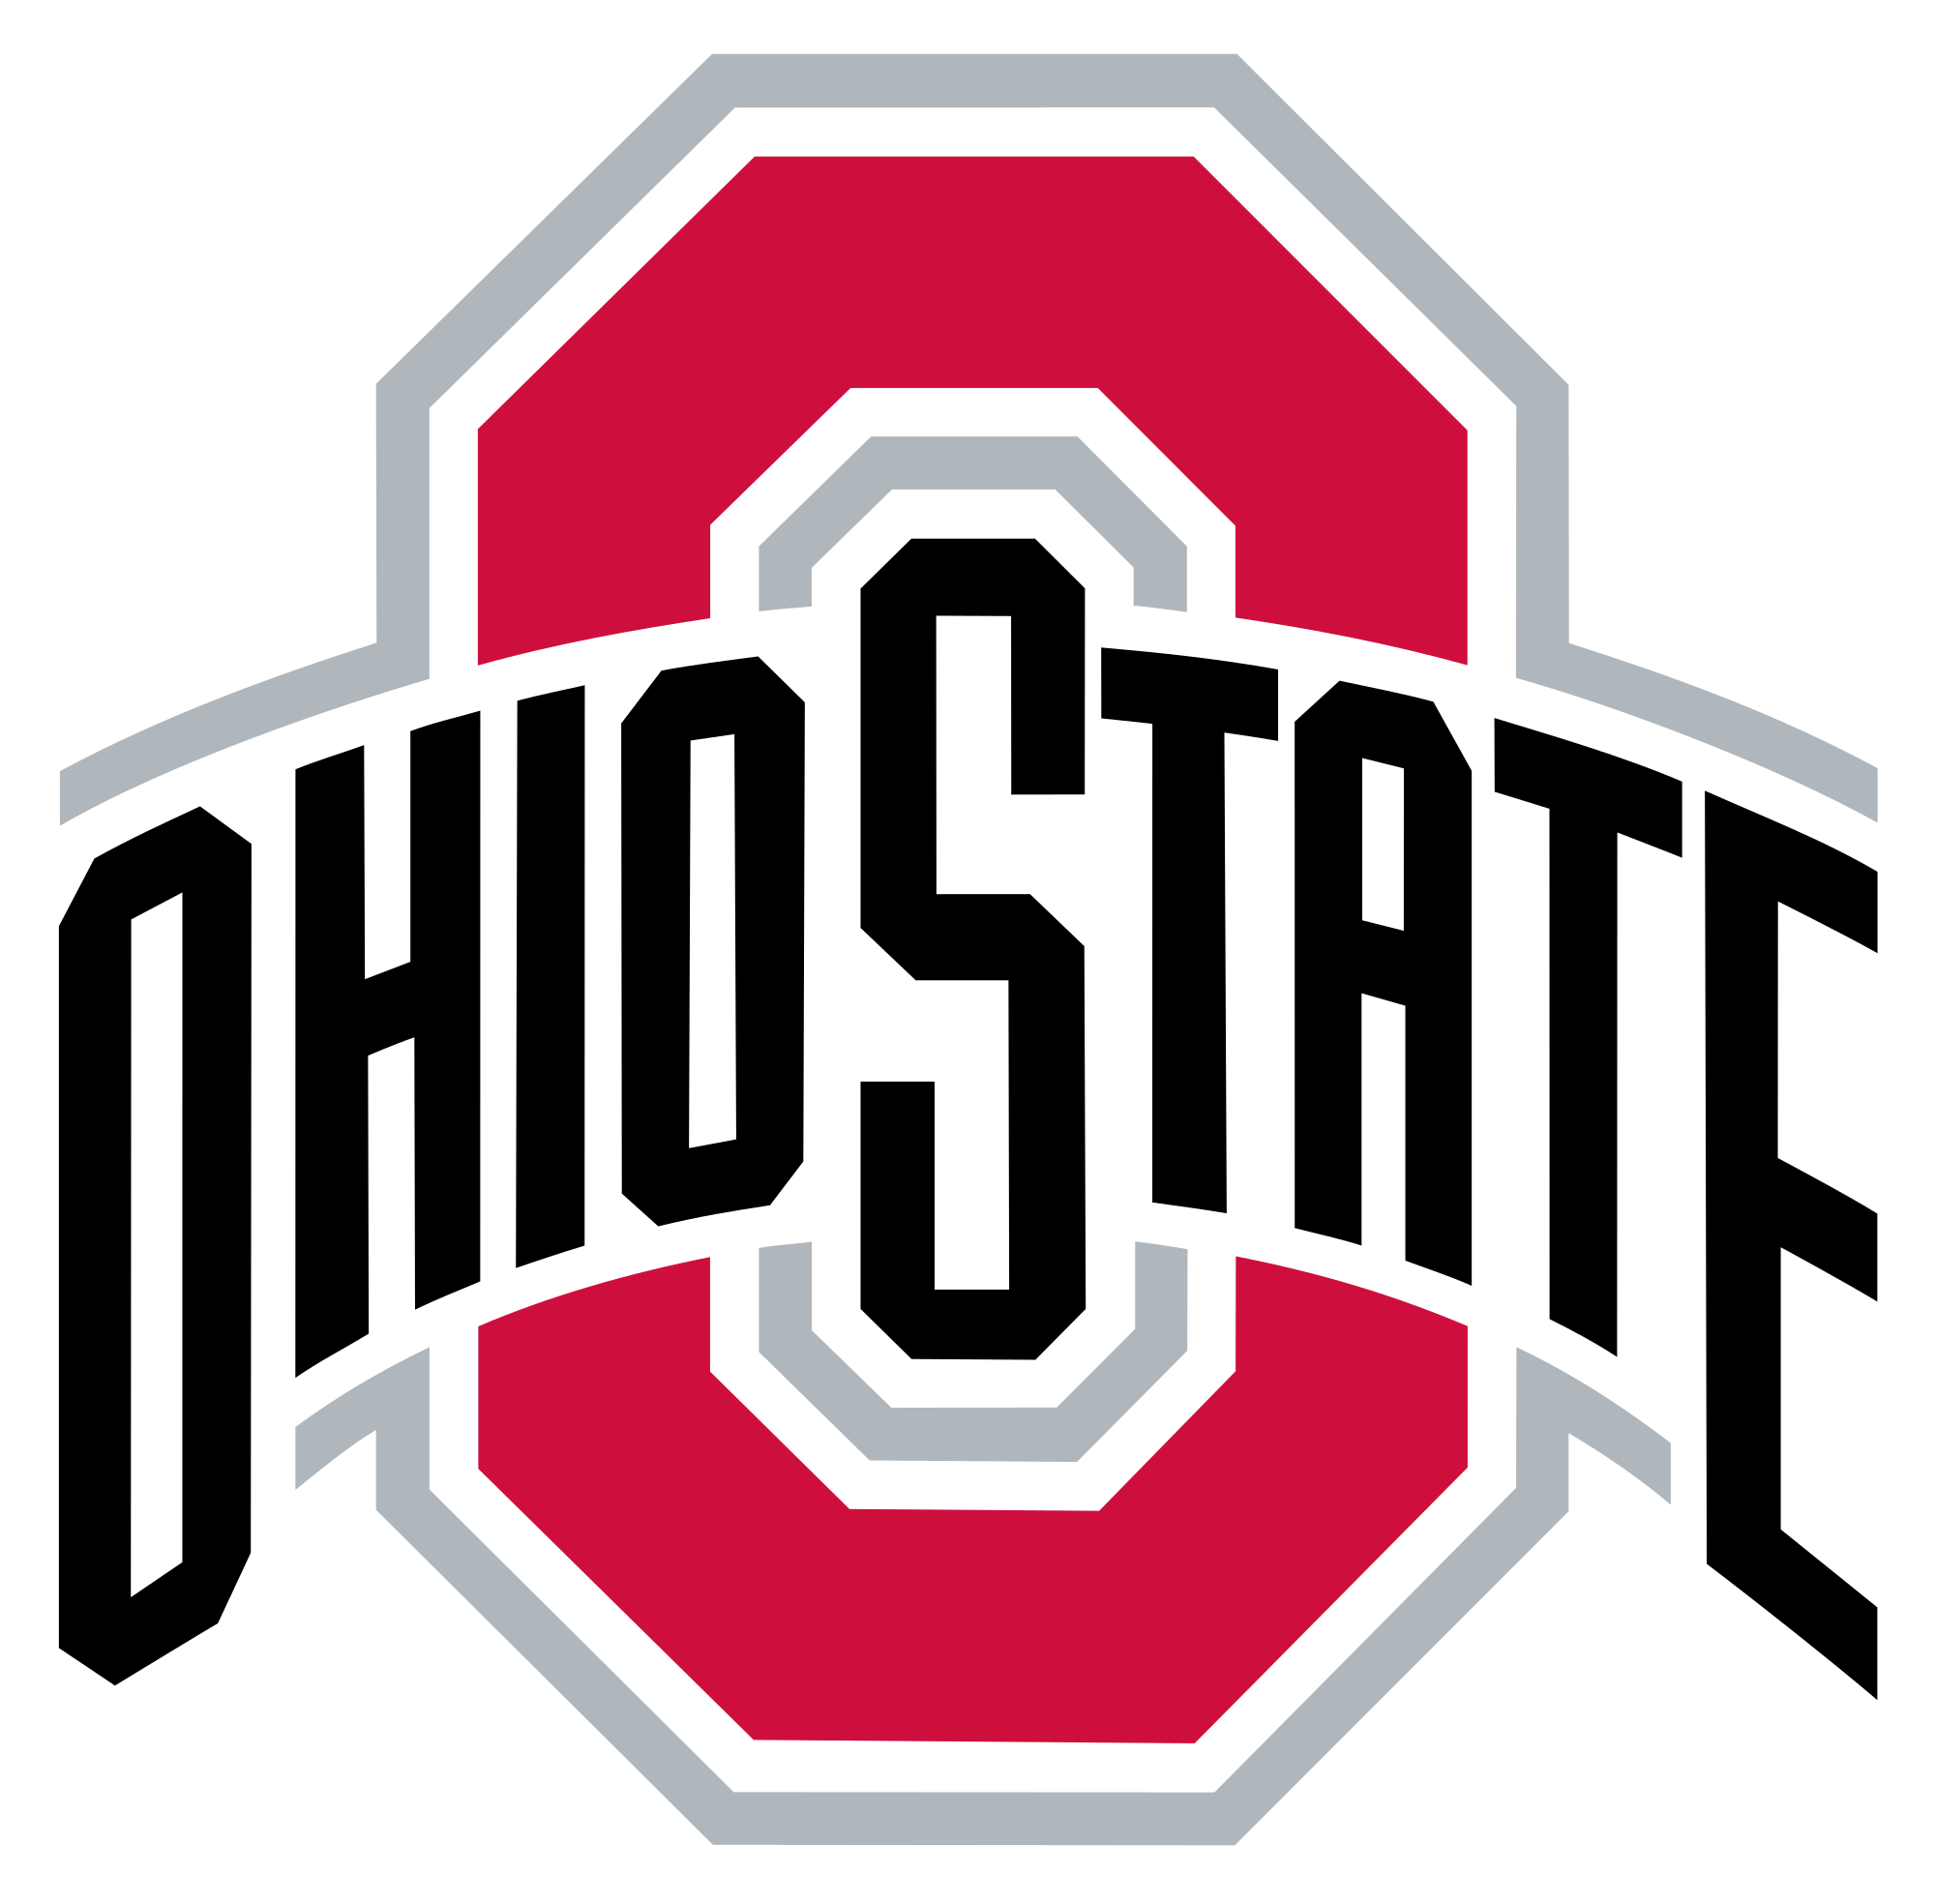 Ohio State Logo - File:Ohio State Buckeyes logo.svg - Wikimedia Commons